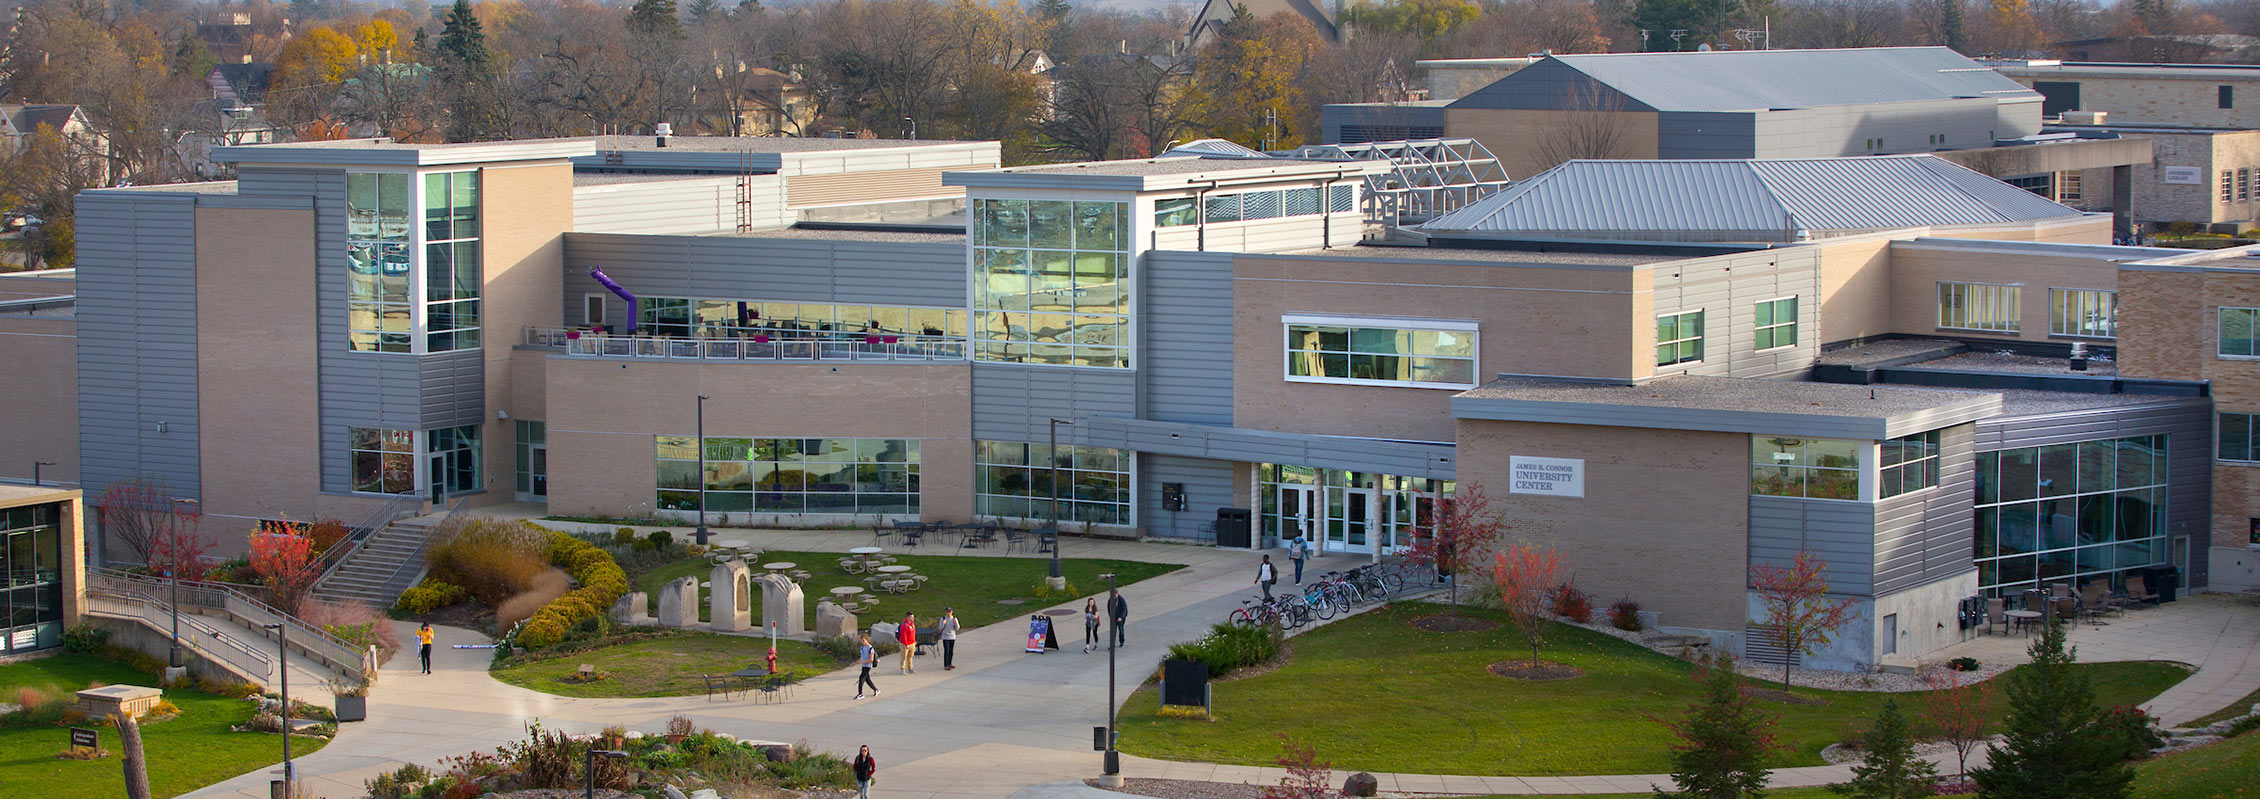 Overhead view of UW-Whitewater's University Center